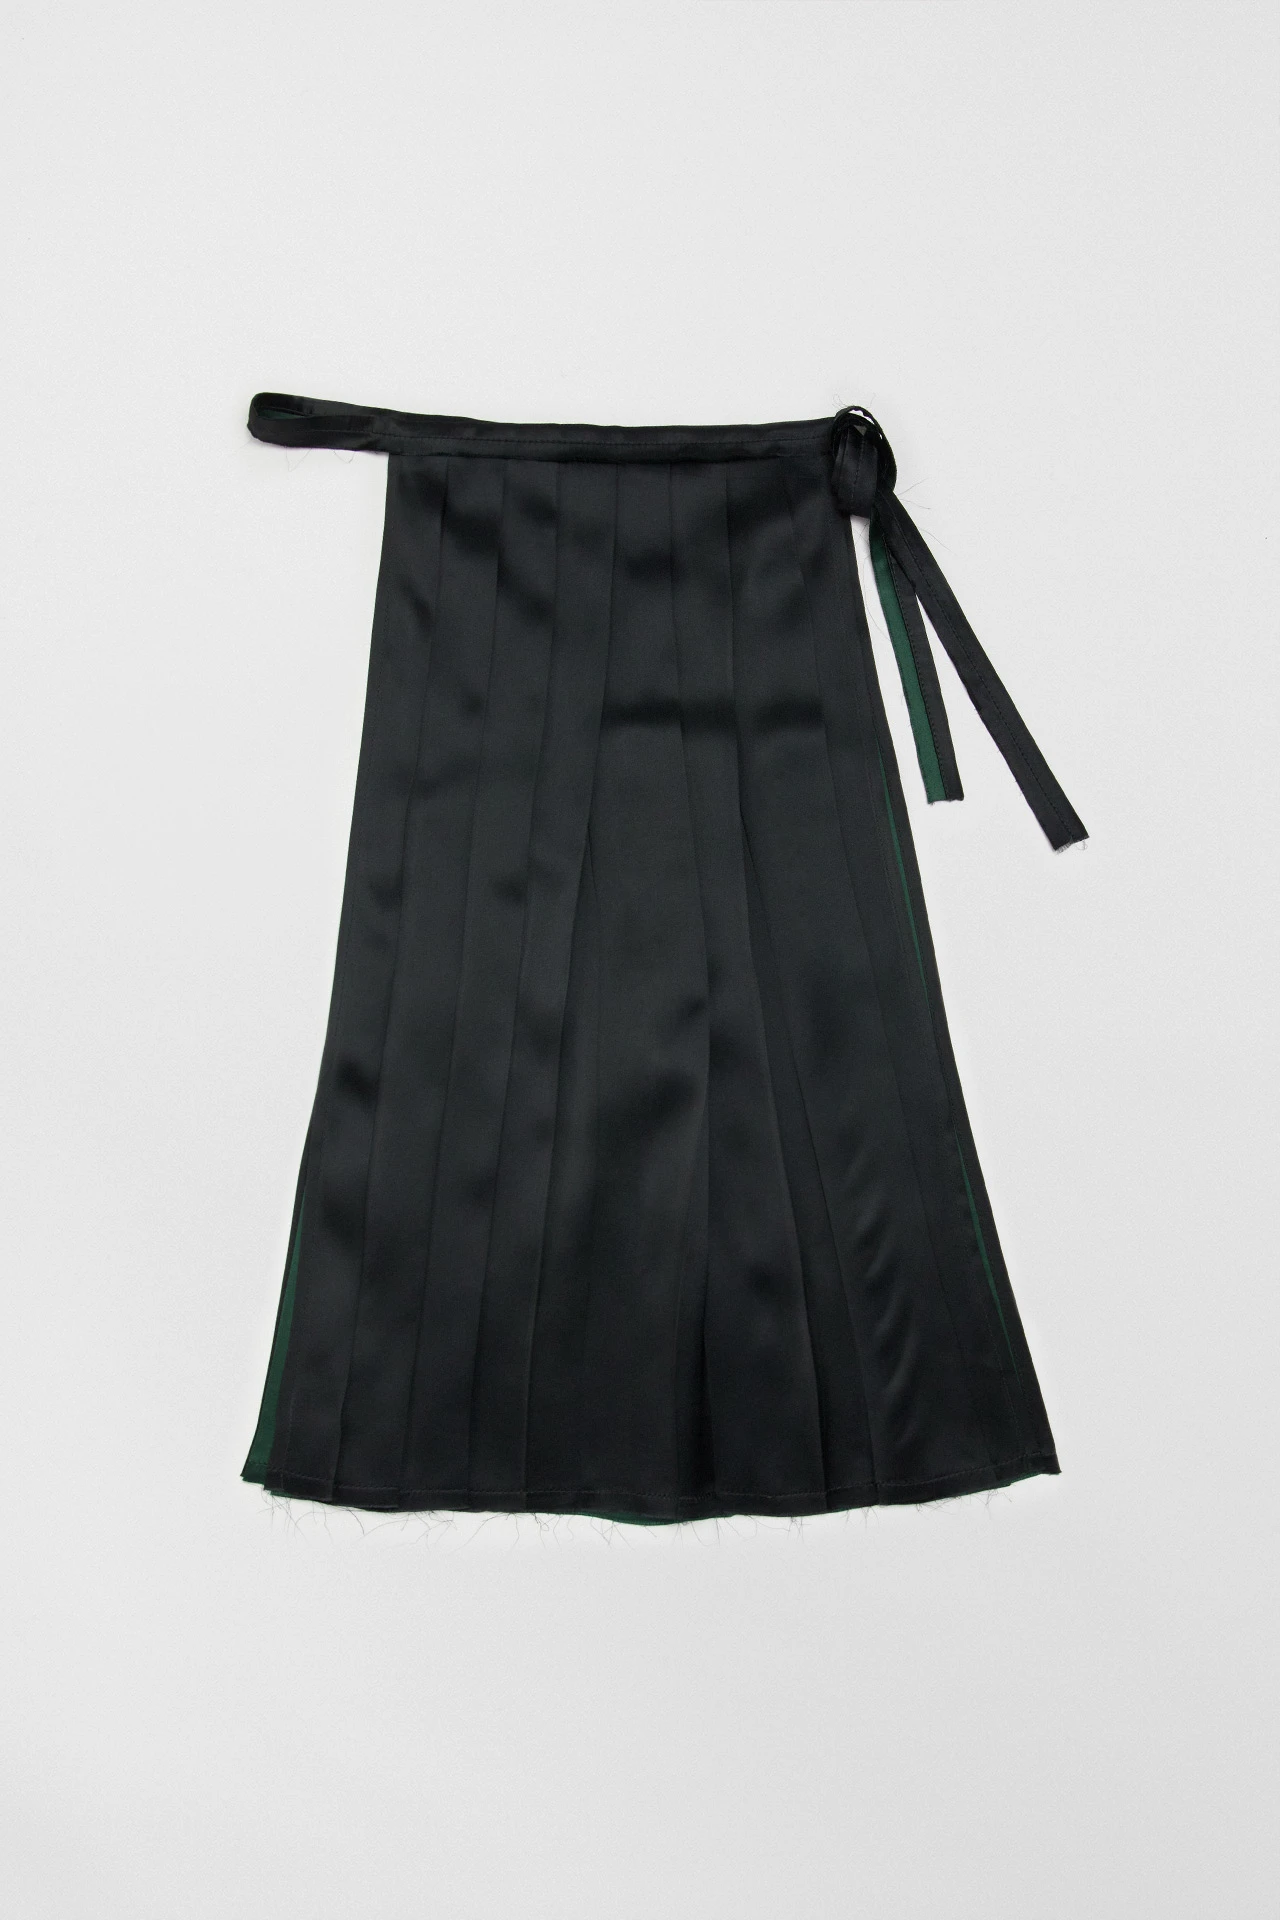 Miista-miyu-black-forest-skirt-01